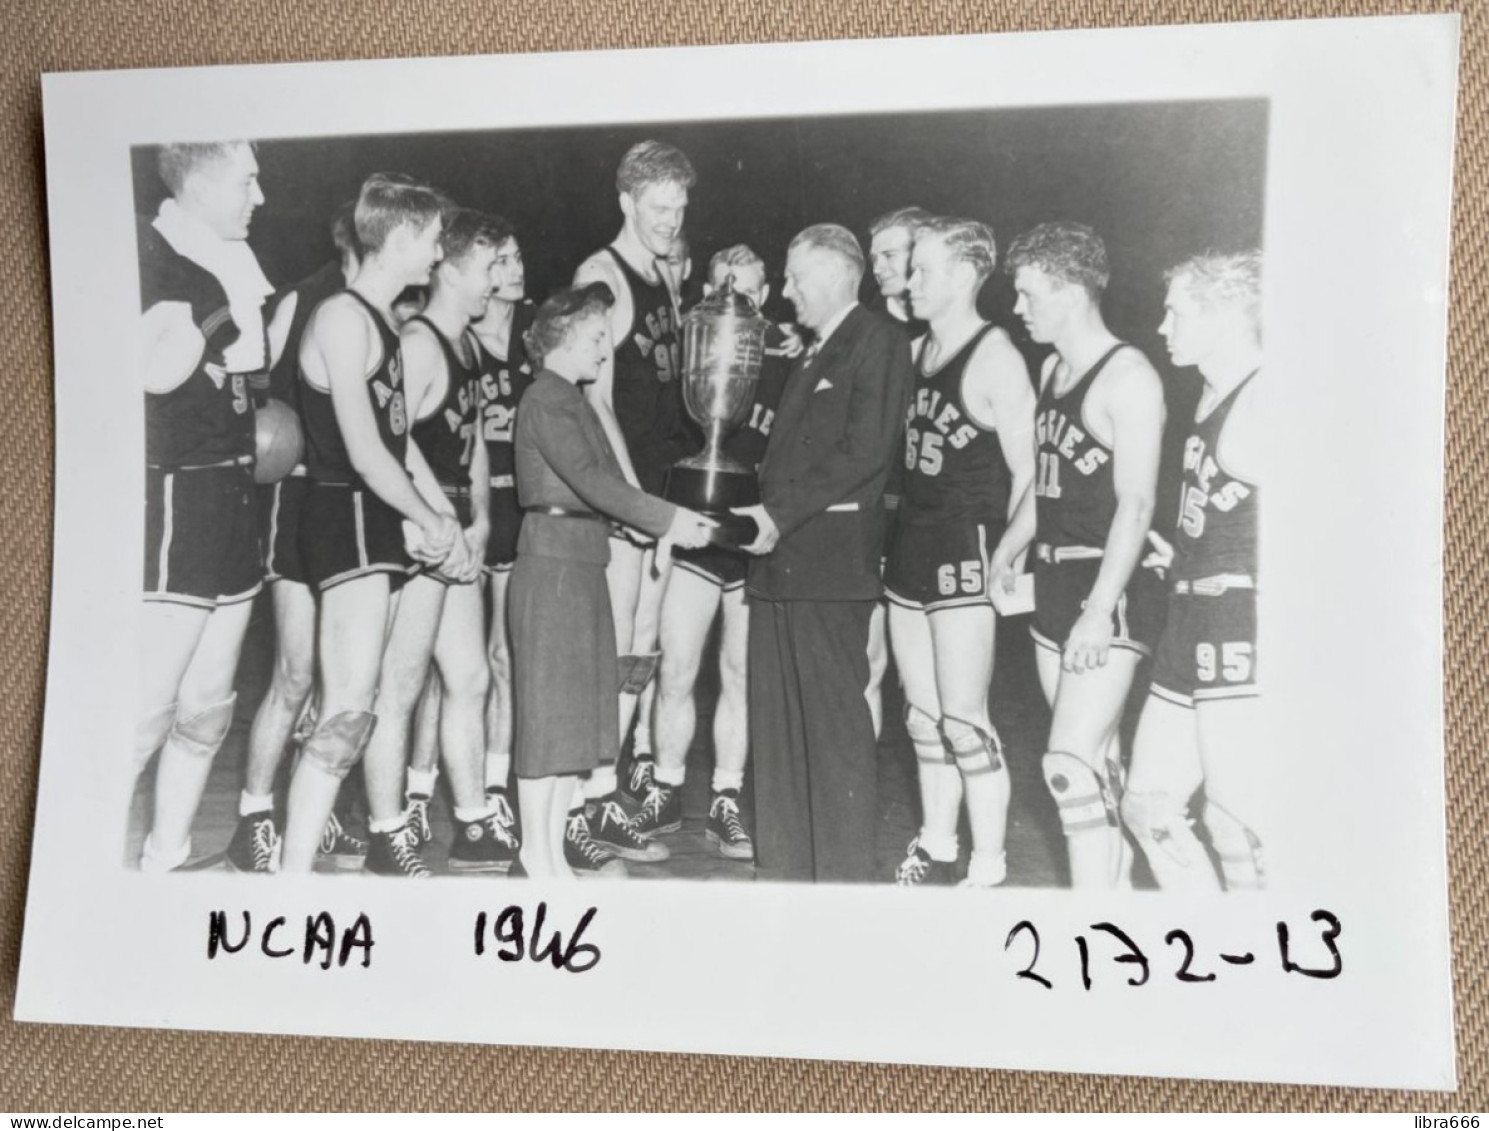 BASKETBALL - 1946 NCAA - Oklahoma A&M Aggies - 12,5 X 9 Cm. (REPRO PHOTO ! - Zie Beschrijving - Voir Description) ! - Sports